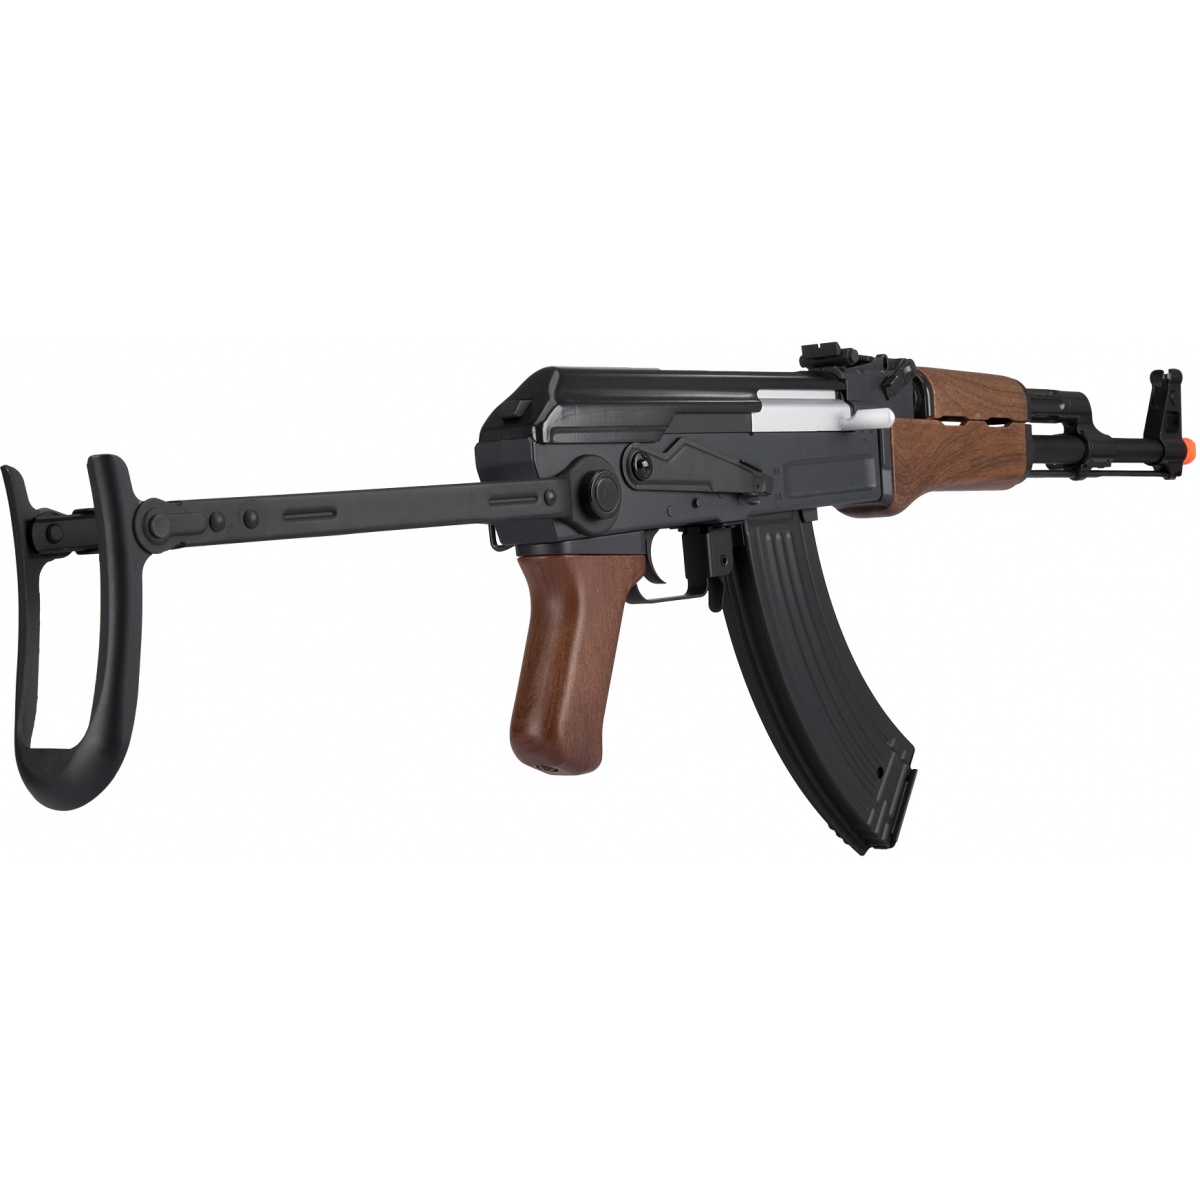 CYMA AK47 Airsoft AEG Rifle (Metal Frame with Real Wood Handguard